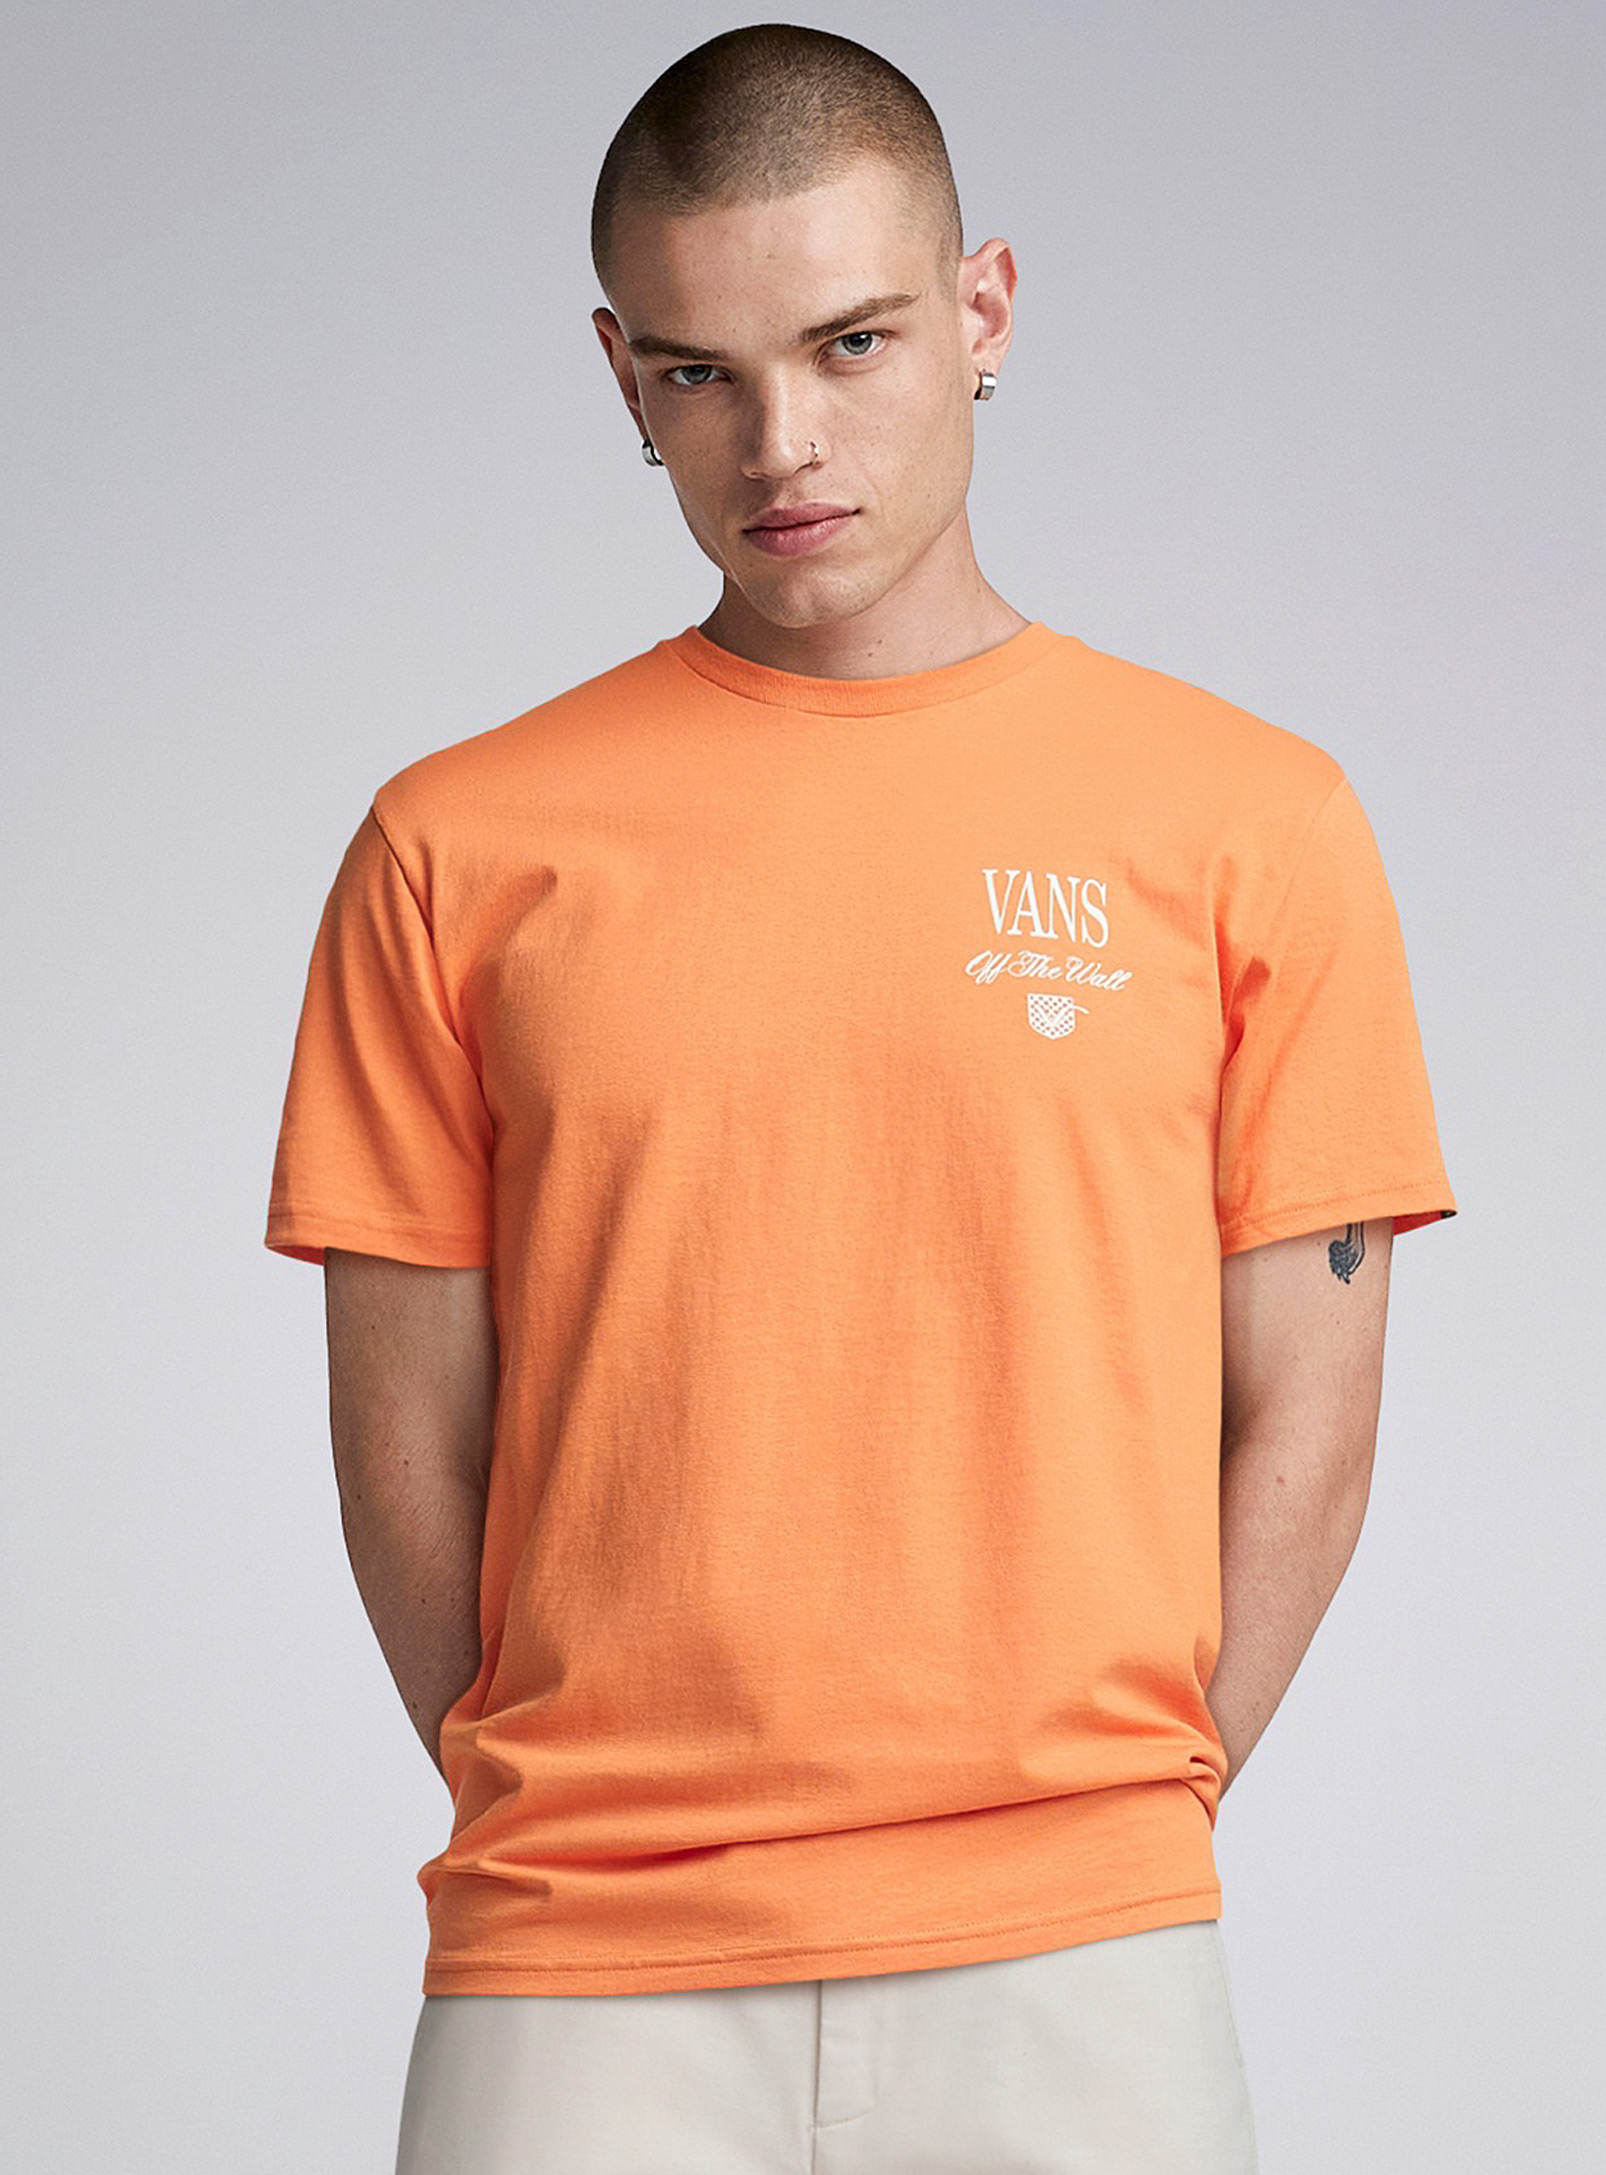 Vans Holmdel T-shirt In Orange